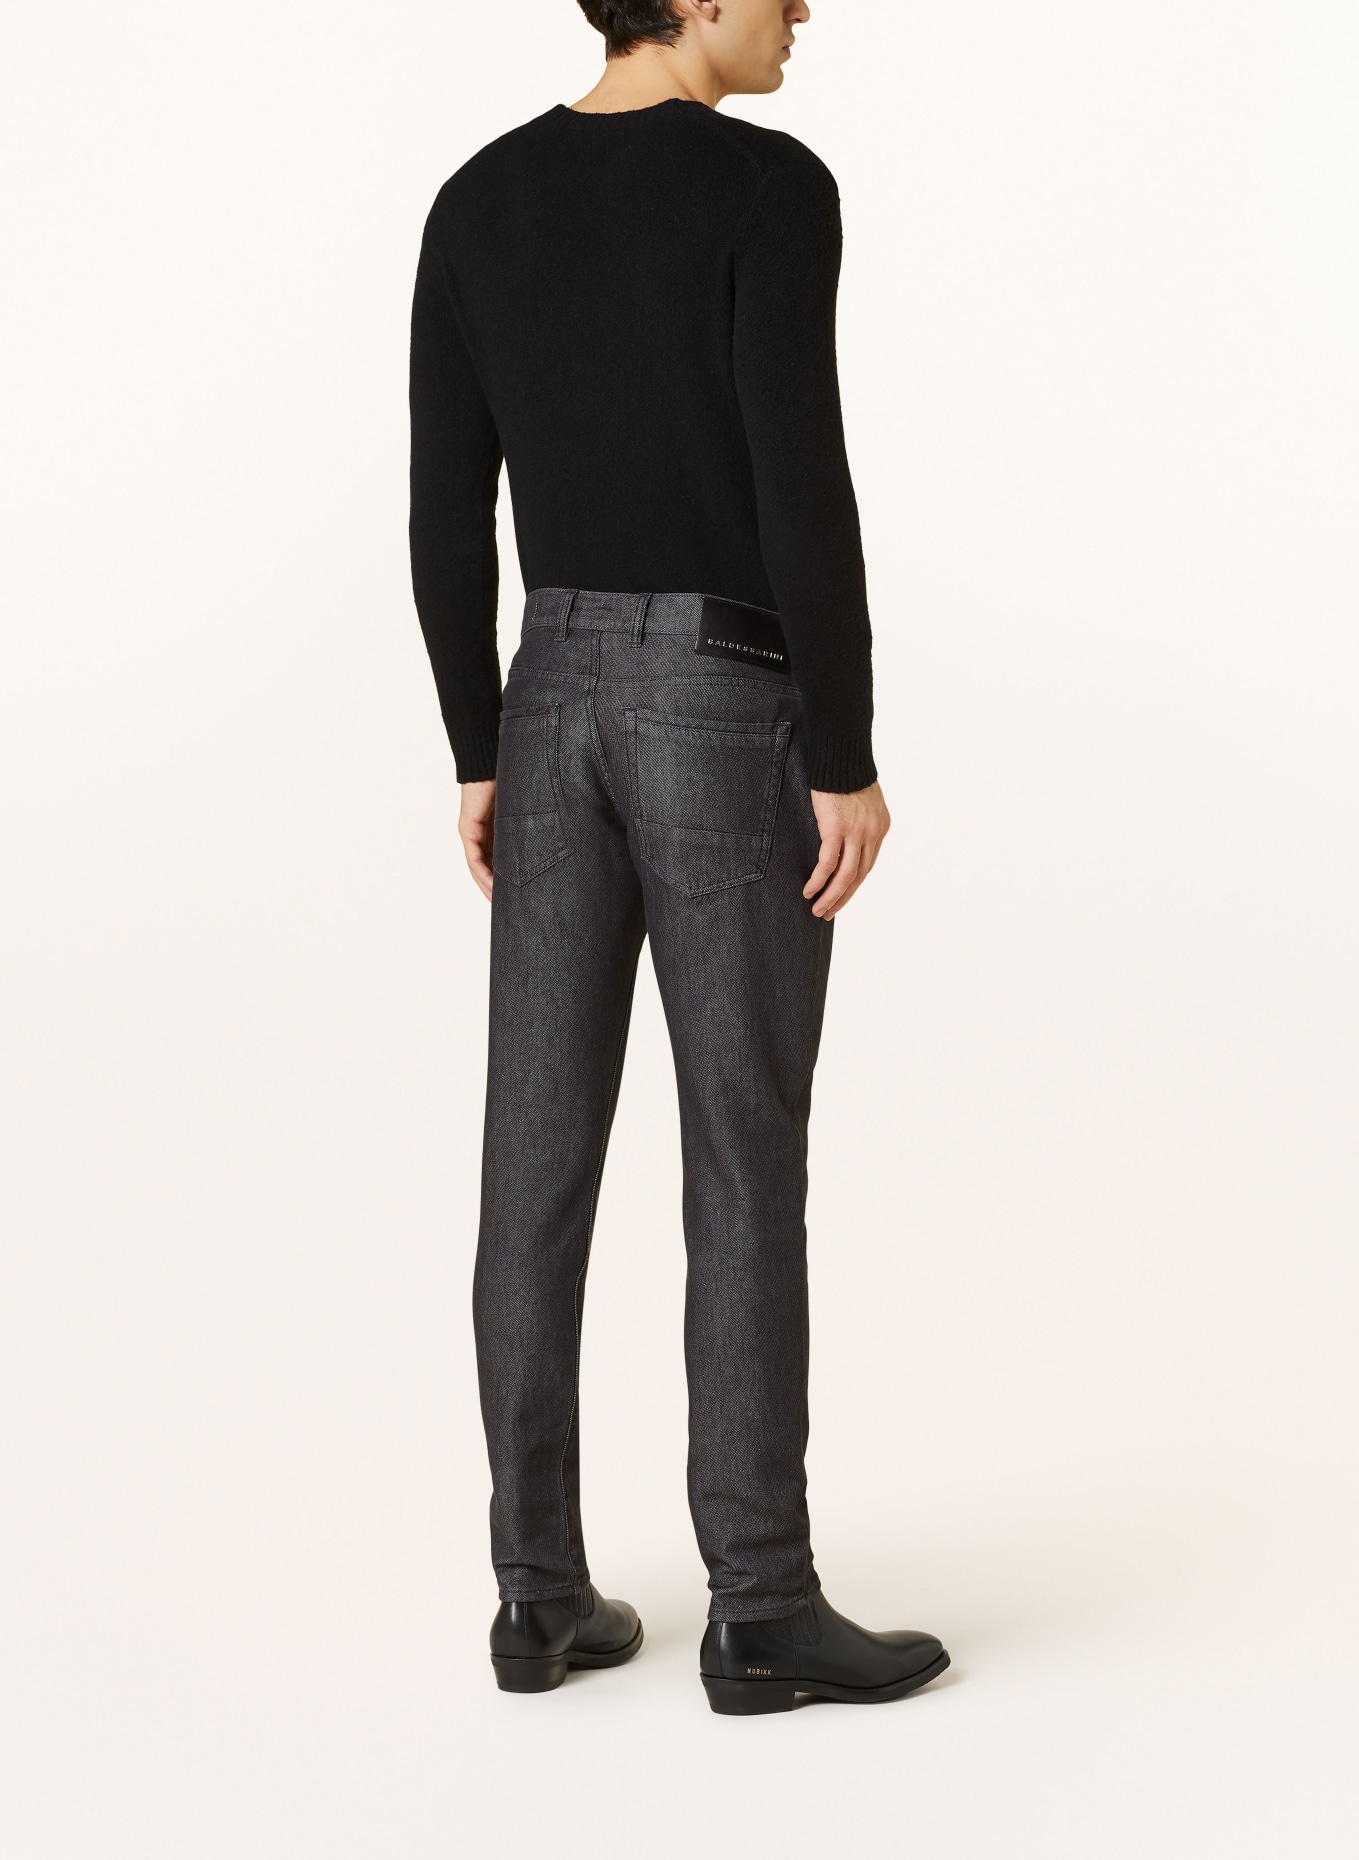 BALDESSARINI Jeans Extra Slim Fit, Farbe: 9811 black stonewash (Bild 3)